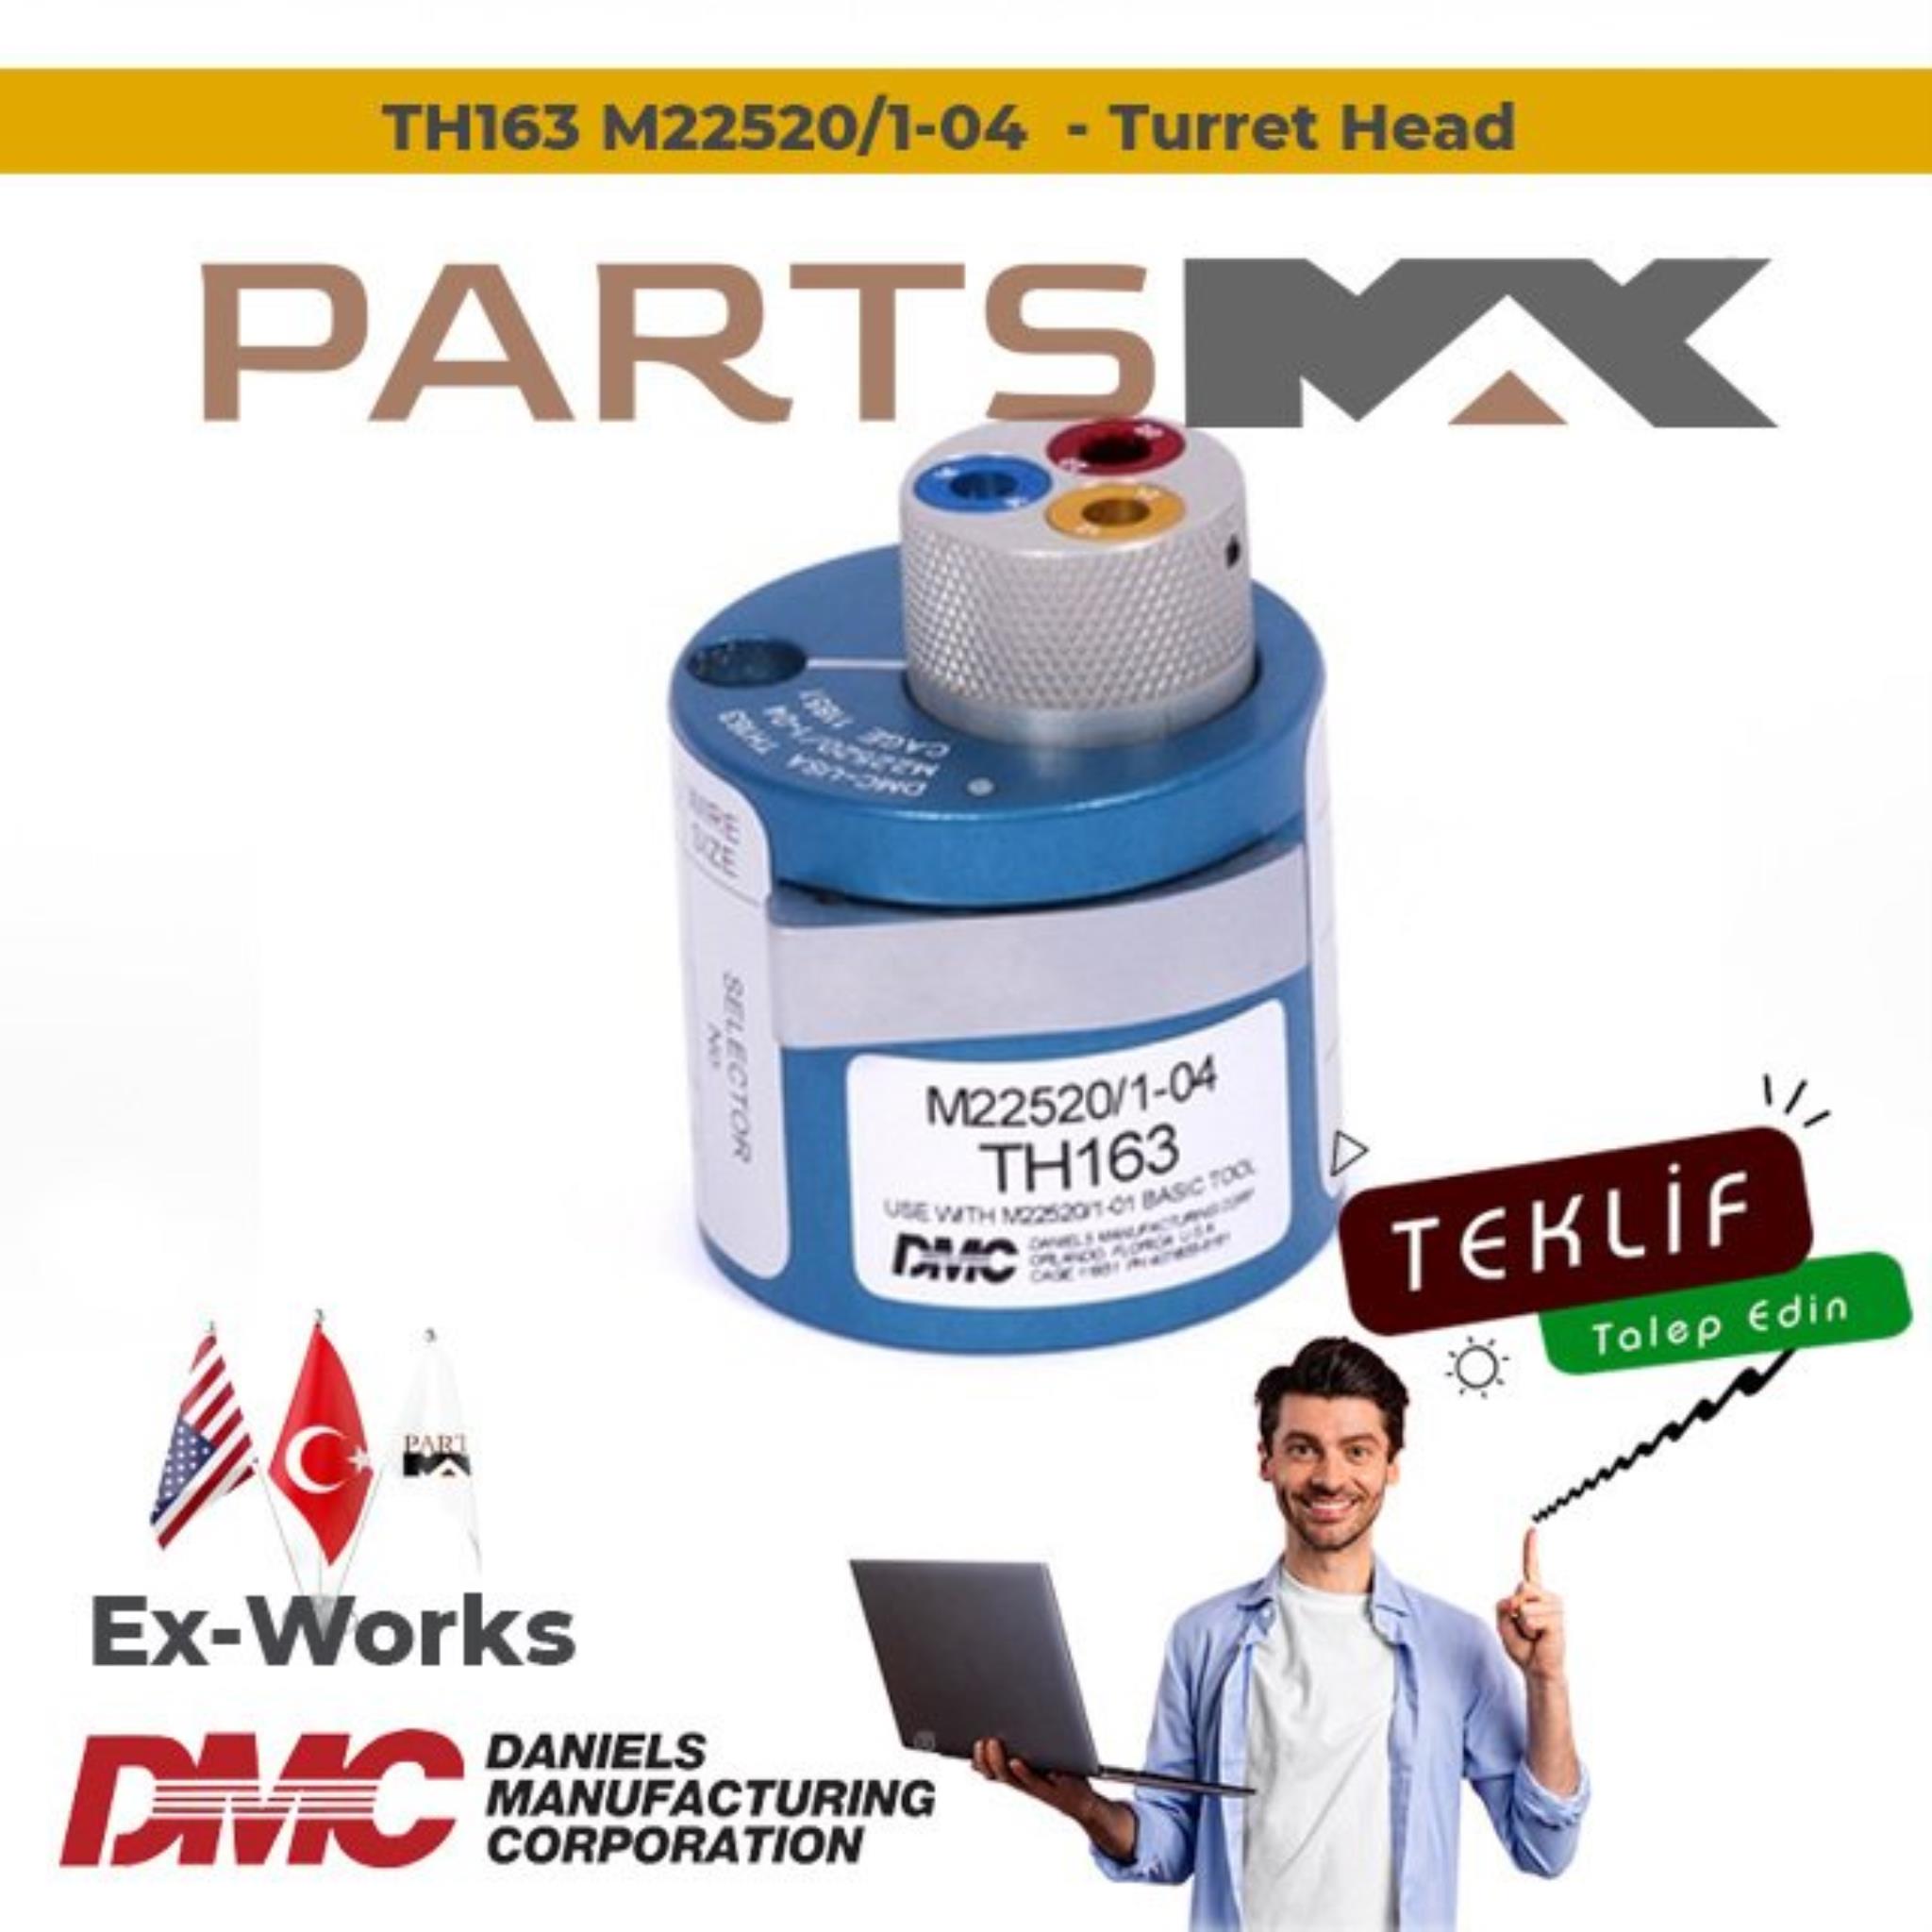 Picture of TH163 M22520/1-04 DMC Tools | Partsmax Türkiye